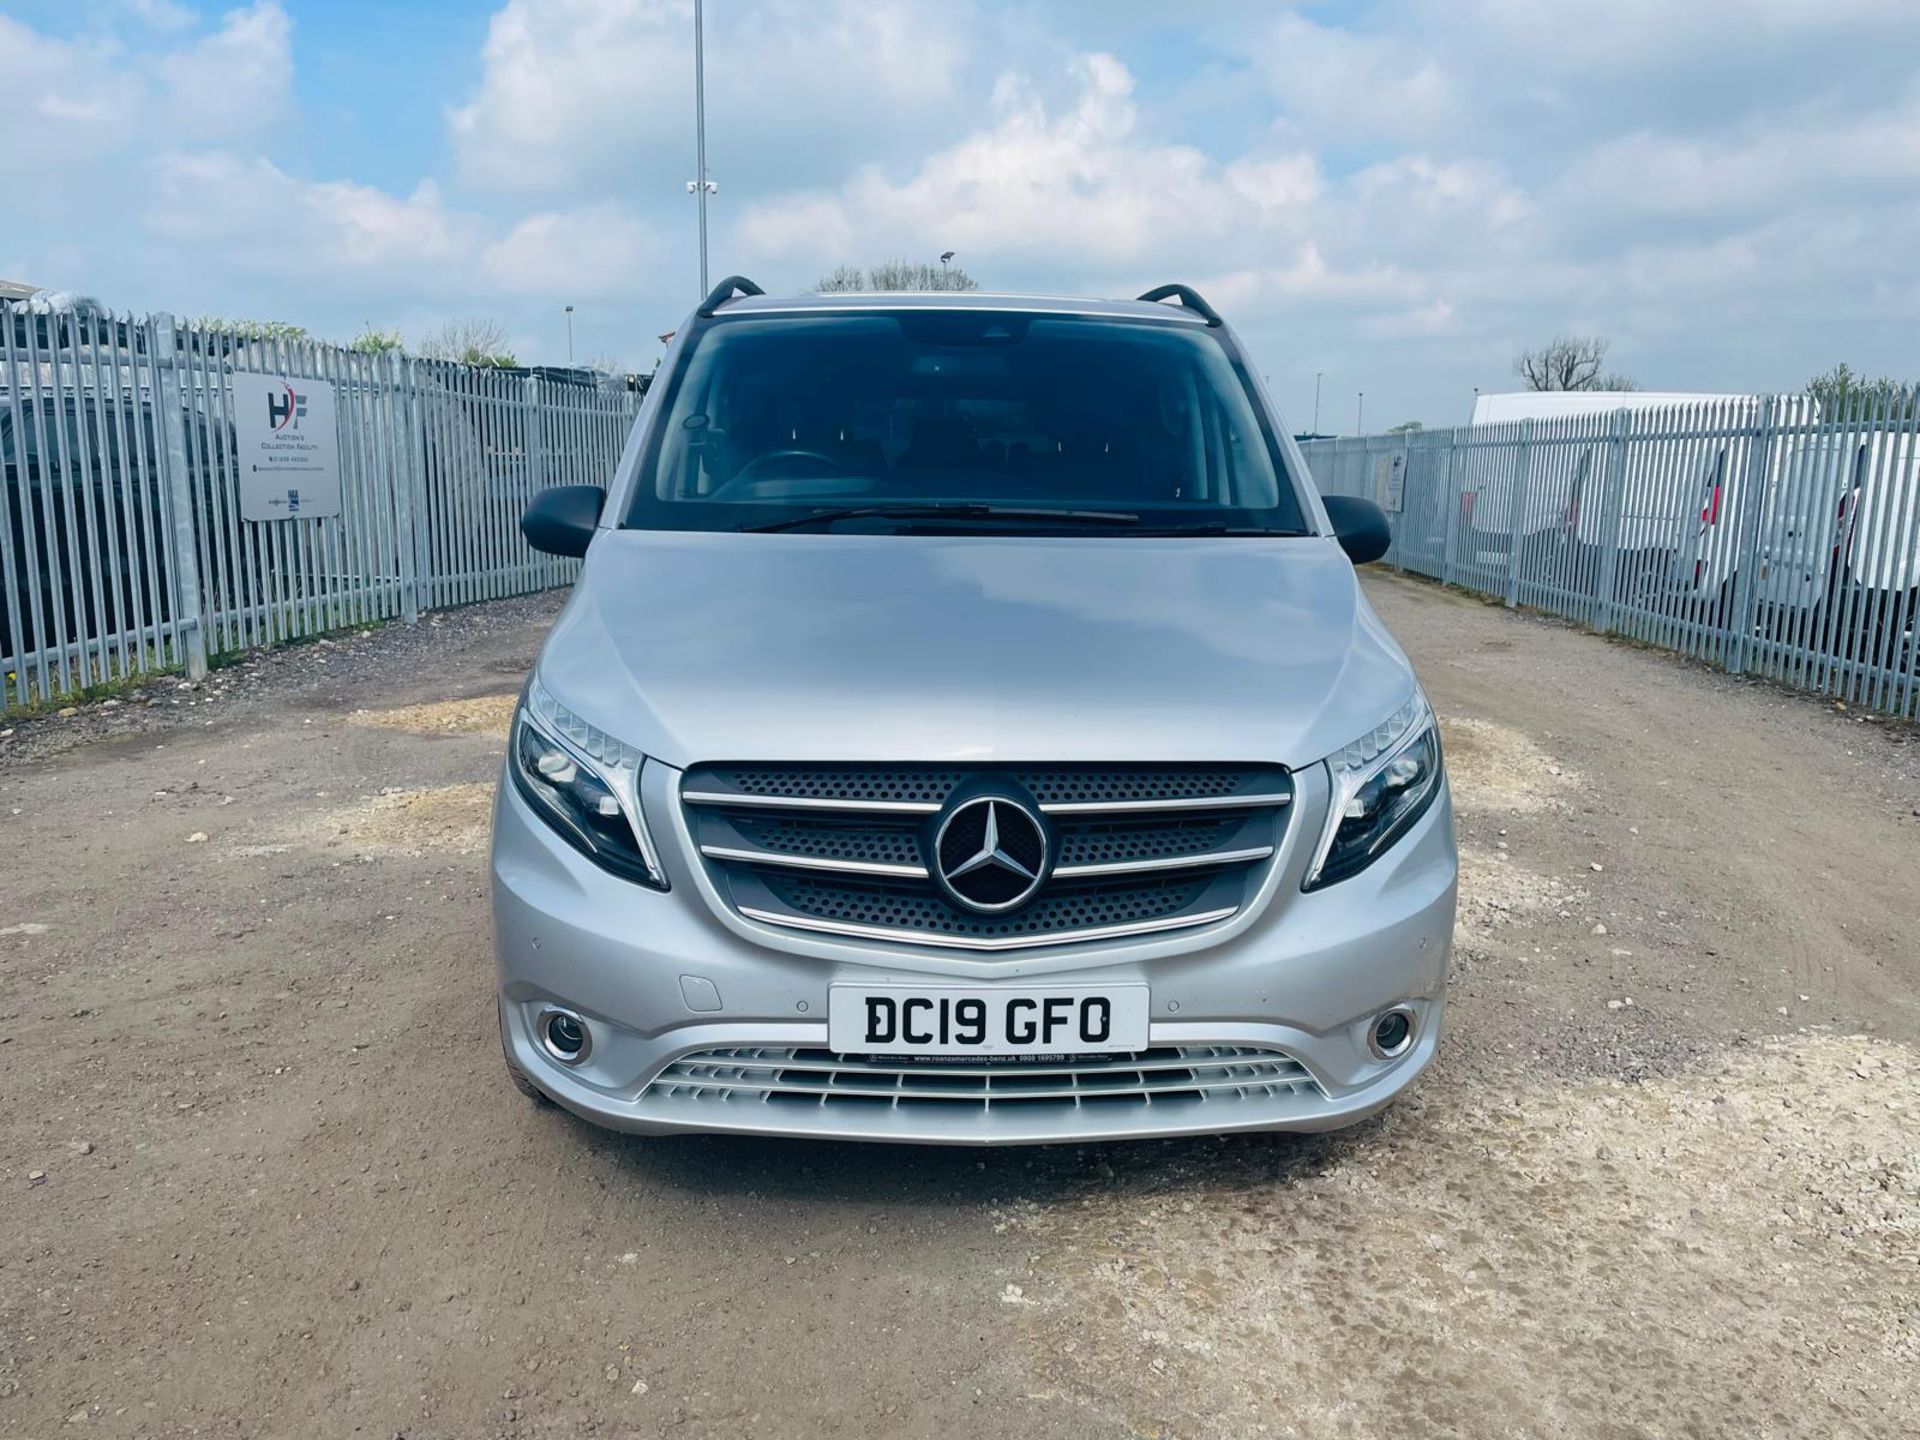 Mercedes-Benz Vito Premium 2.1 119 CDI 7G Tronic Crew Cab LWB Automatic 2019'19 Reg'- Alloy Wheels - Bild 2 aus 31